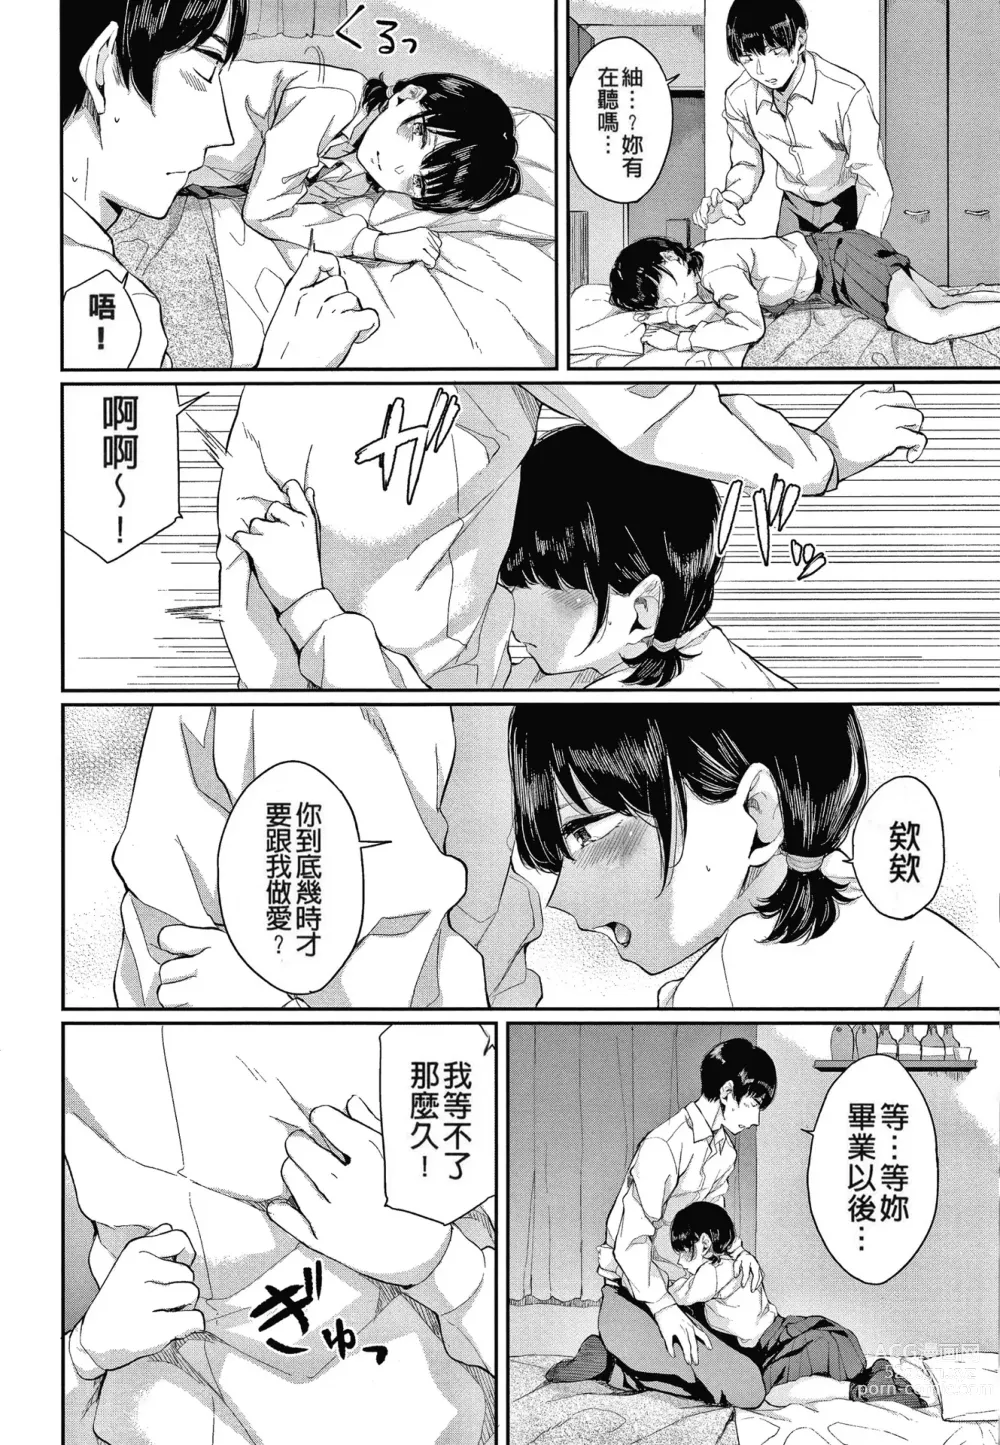 Page 8 of manga Hikage no Hana (uncensored)